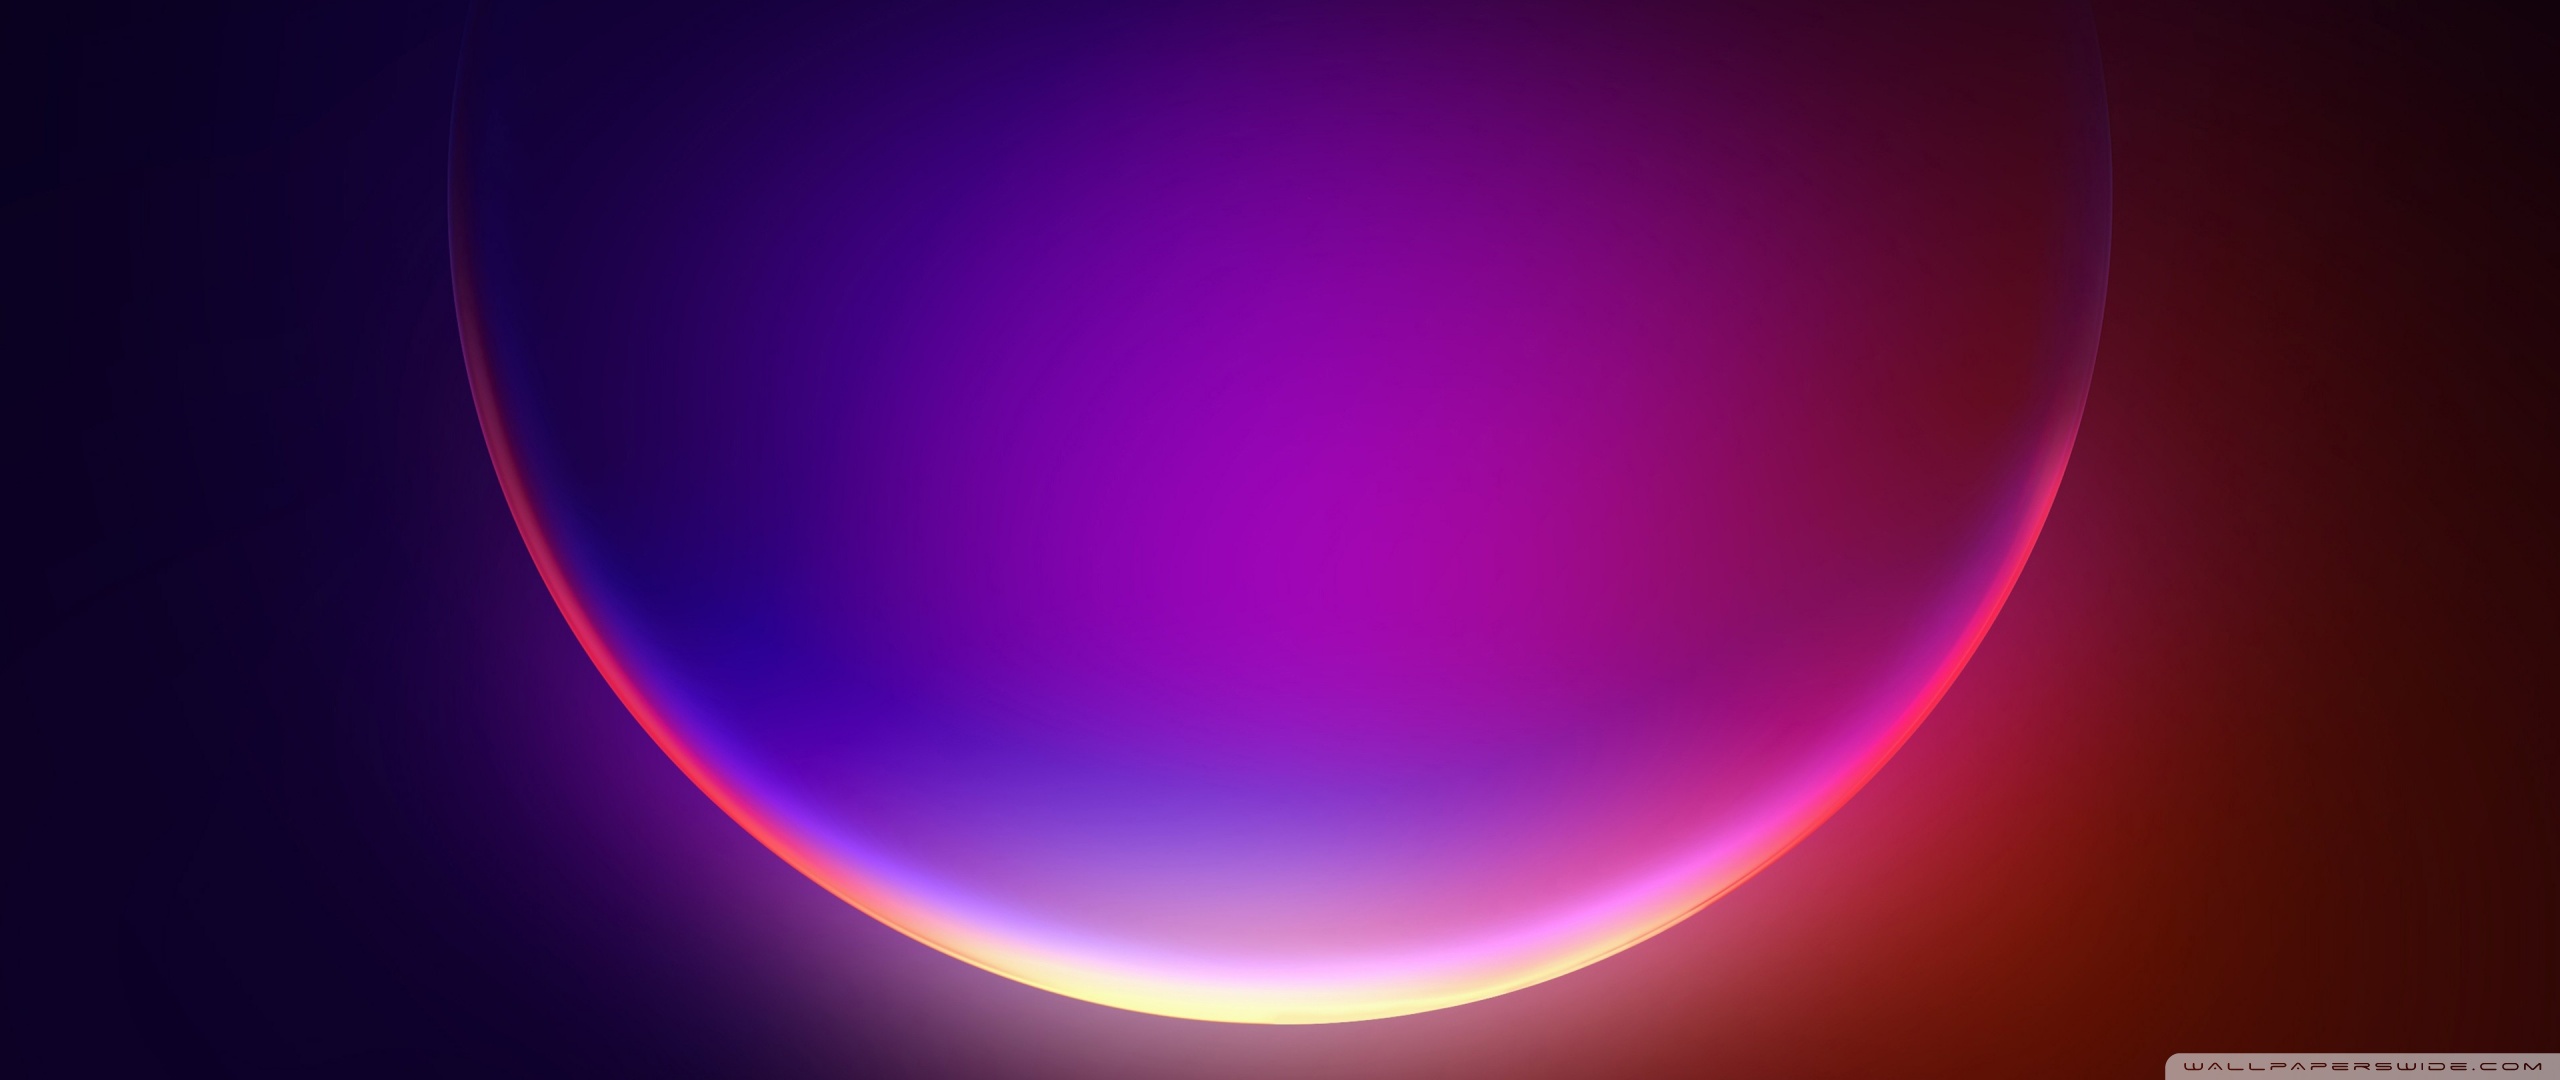 Purple Circle Aesthetic Ultra HD Desktop Background Wallpaper for ...